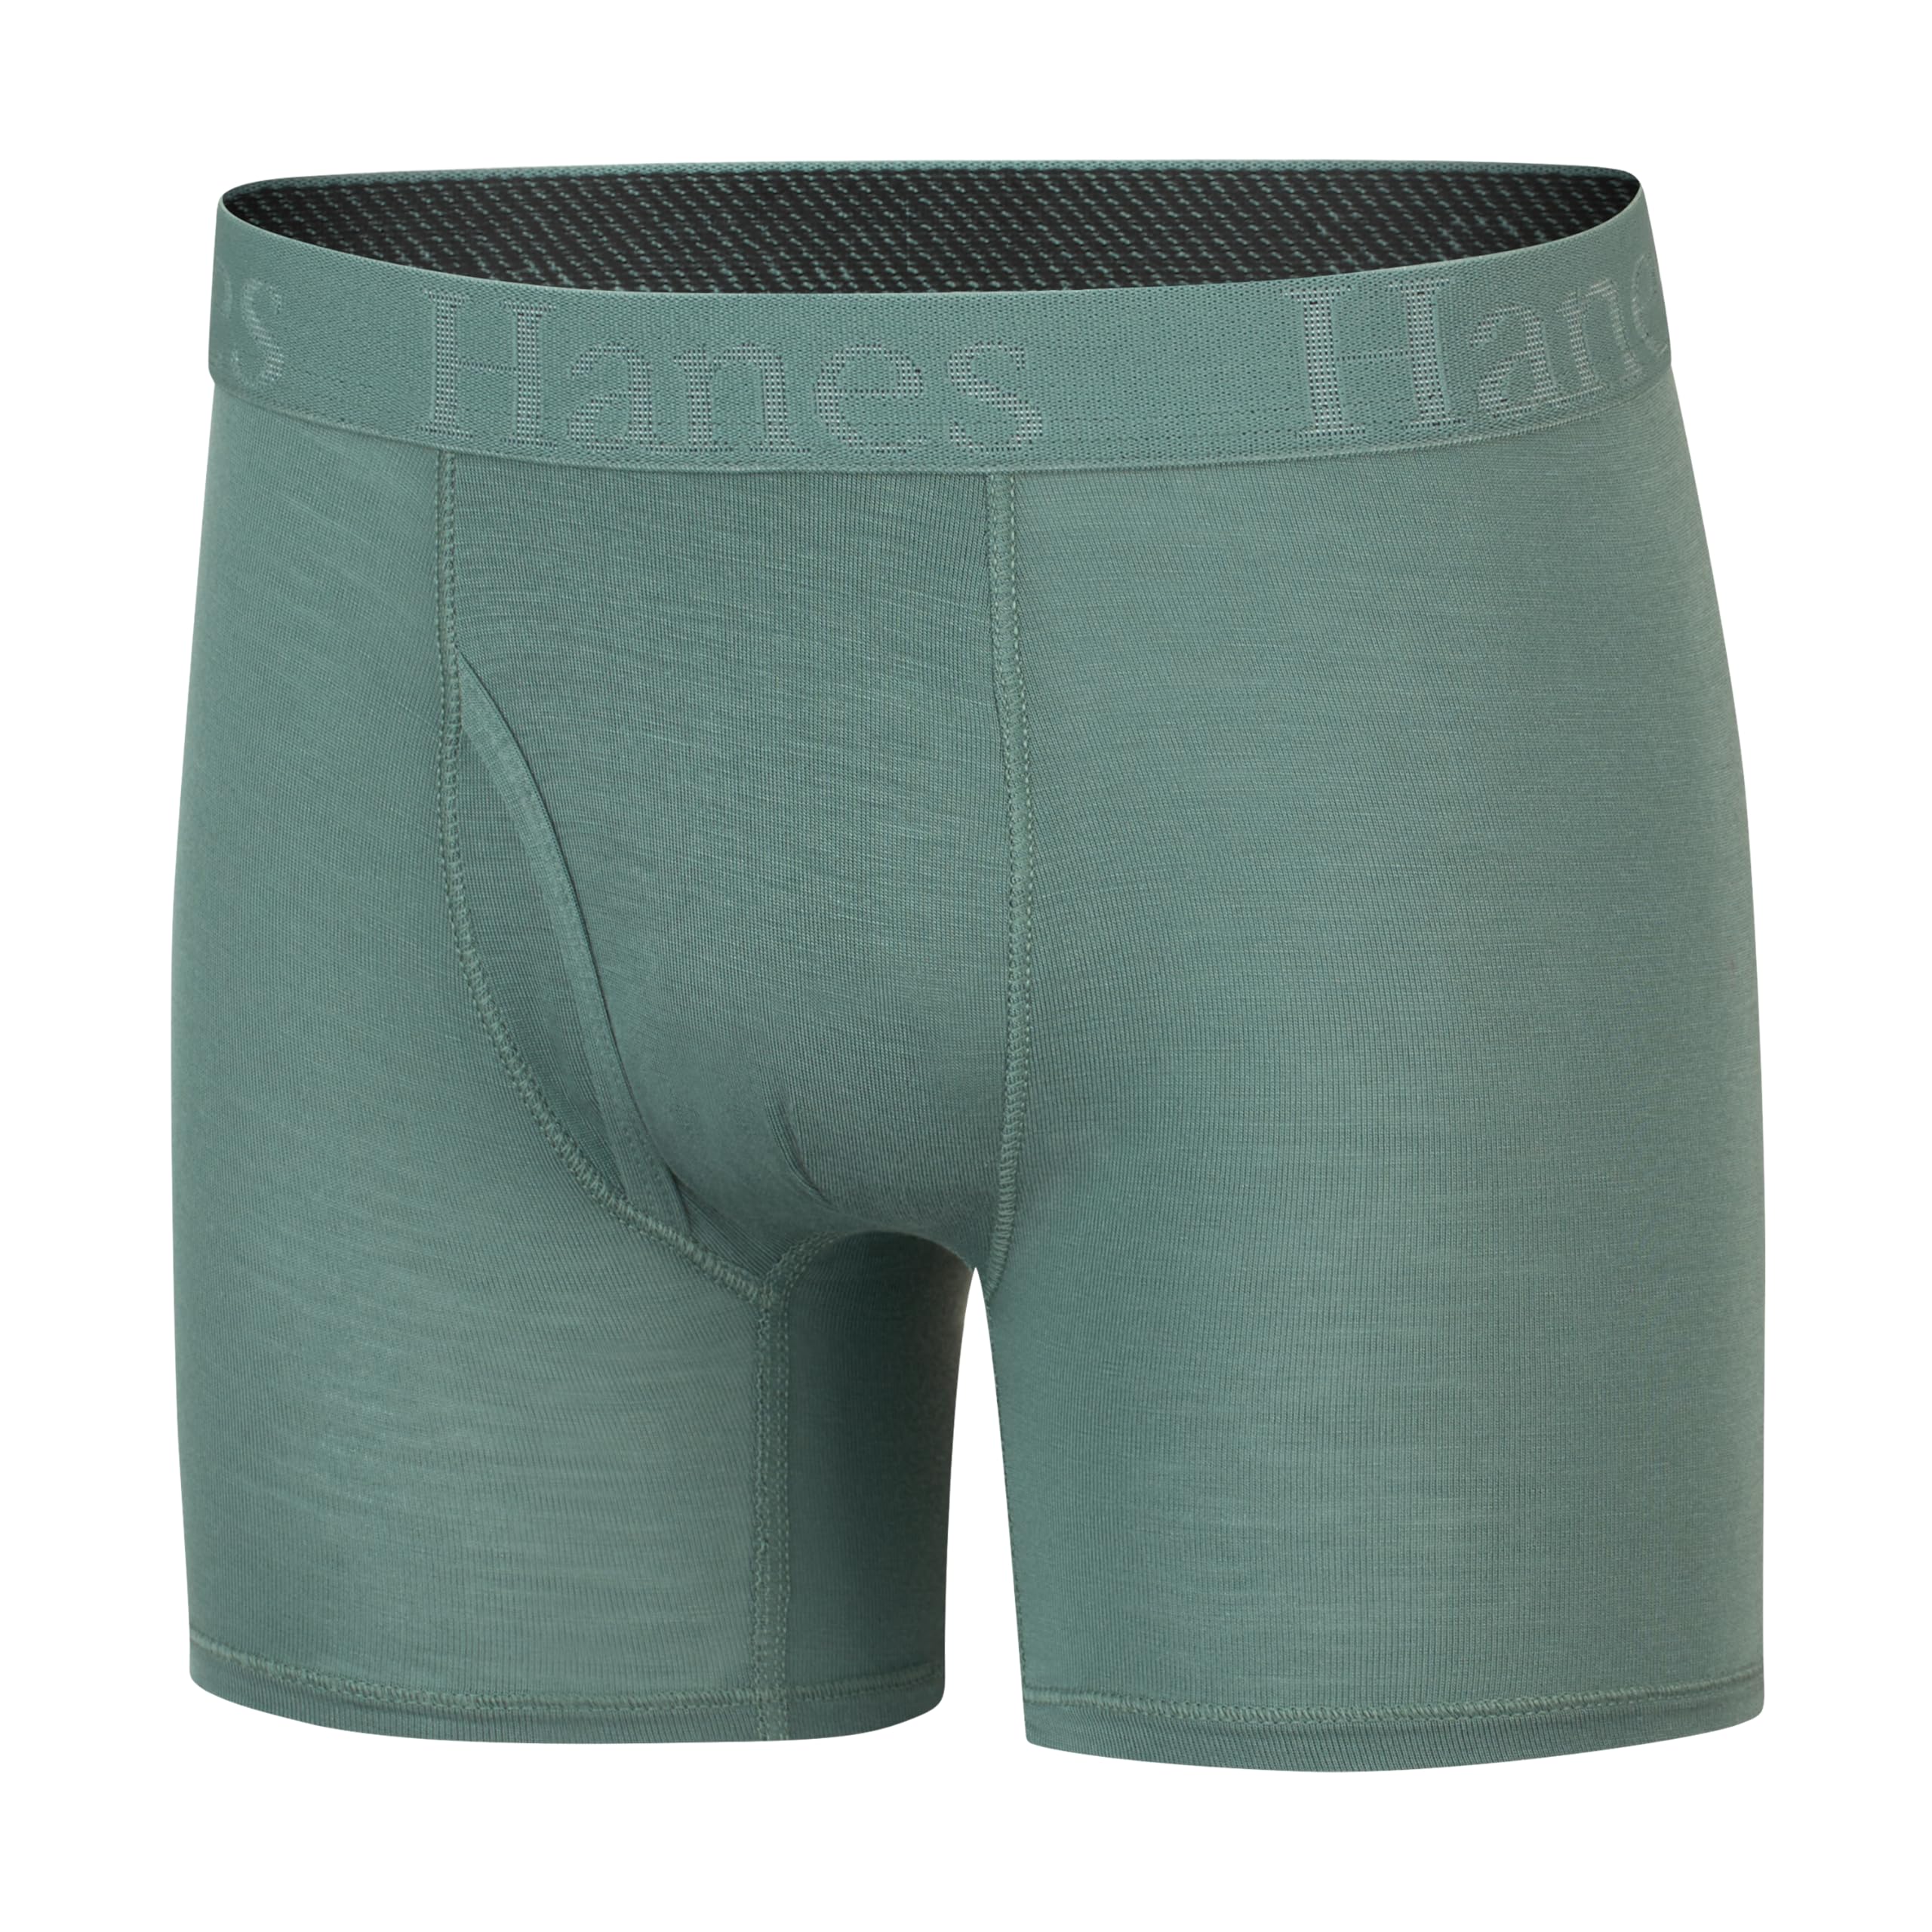 Hanes Boys' Big Originals Supersoft Boxer Briefs, Viscose from Bamboo Underwear, 5-Pack